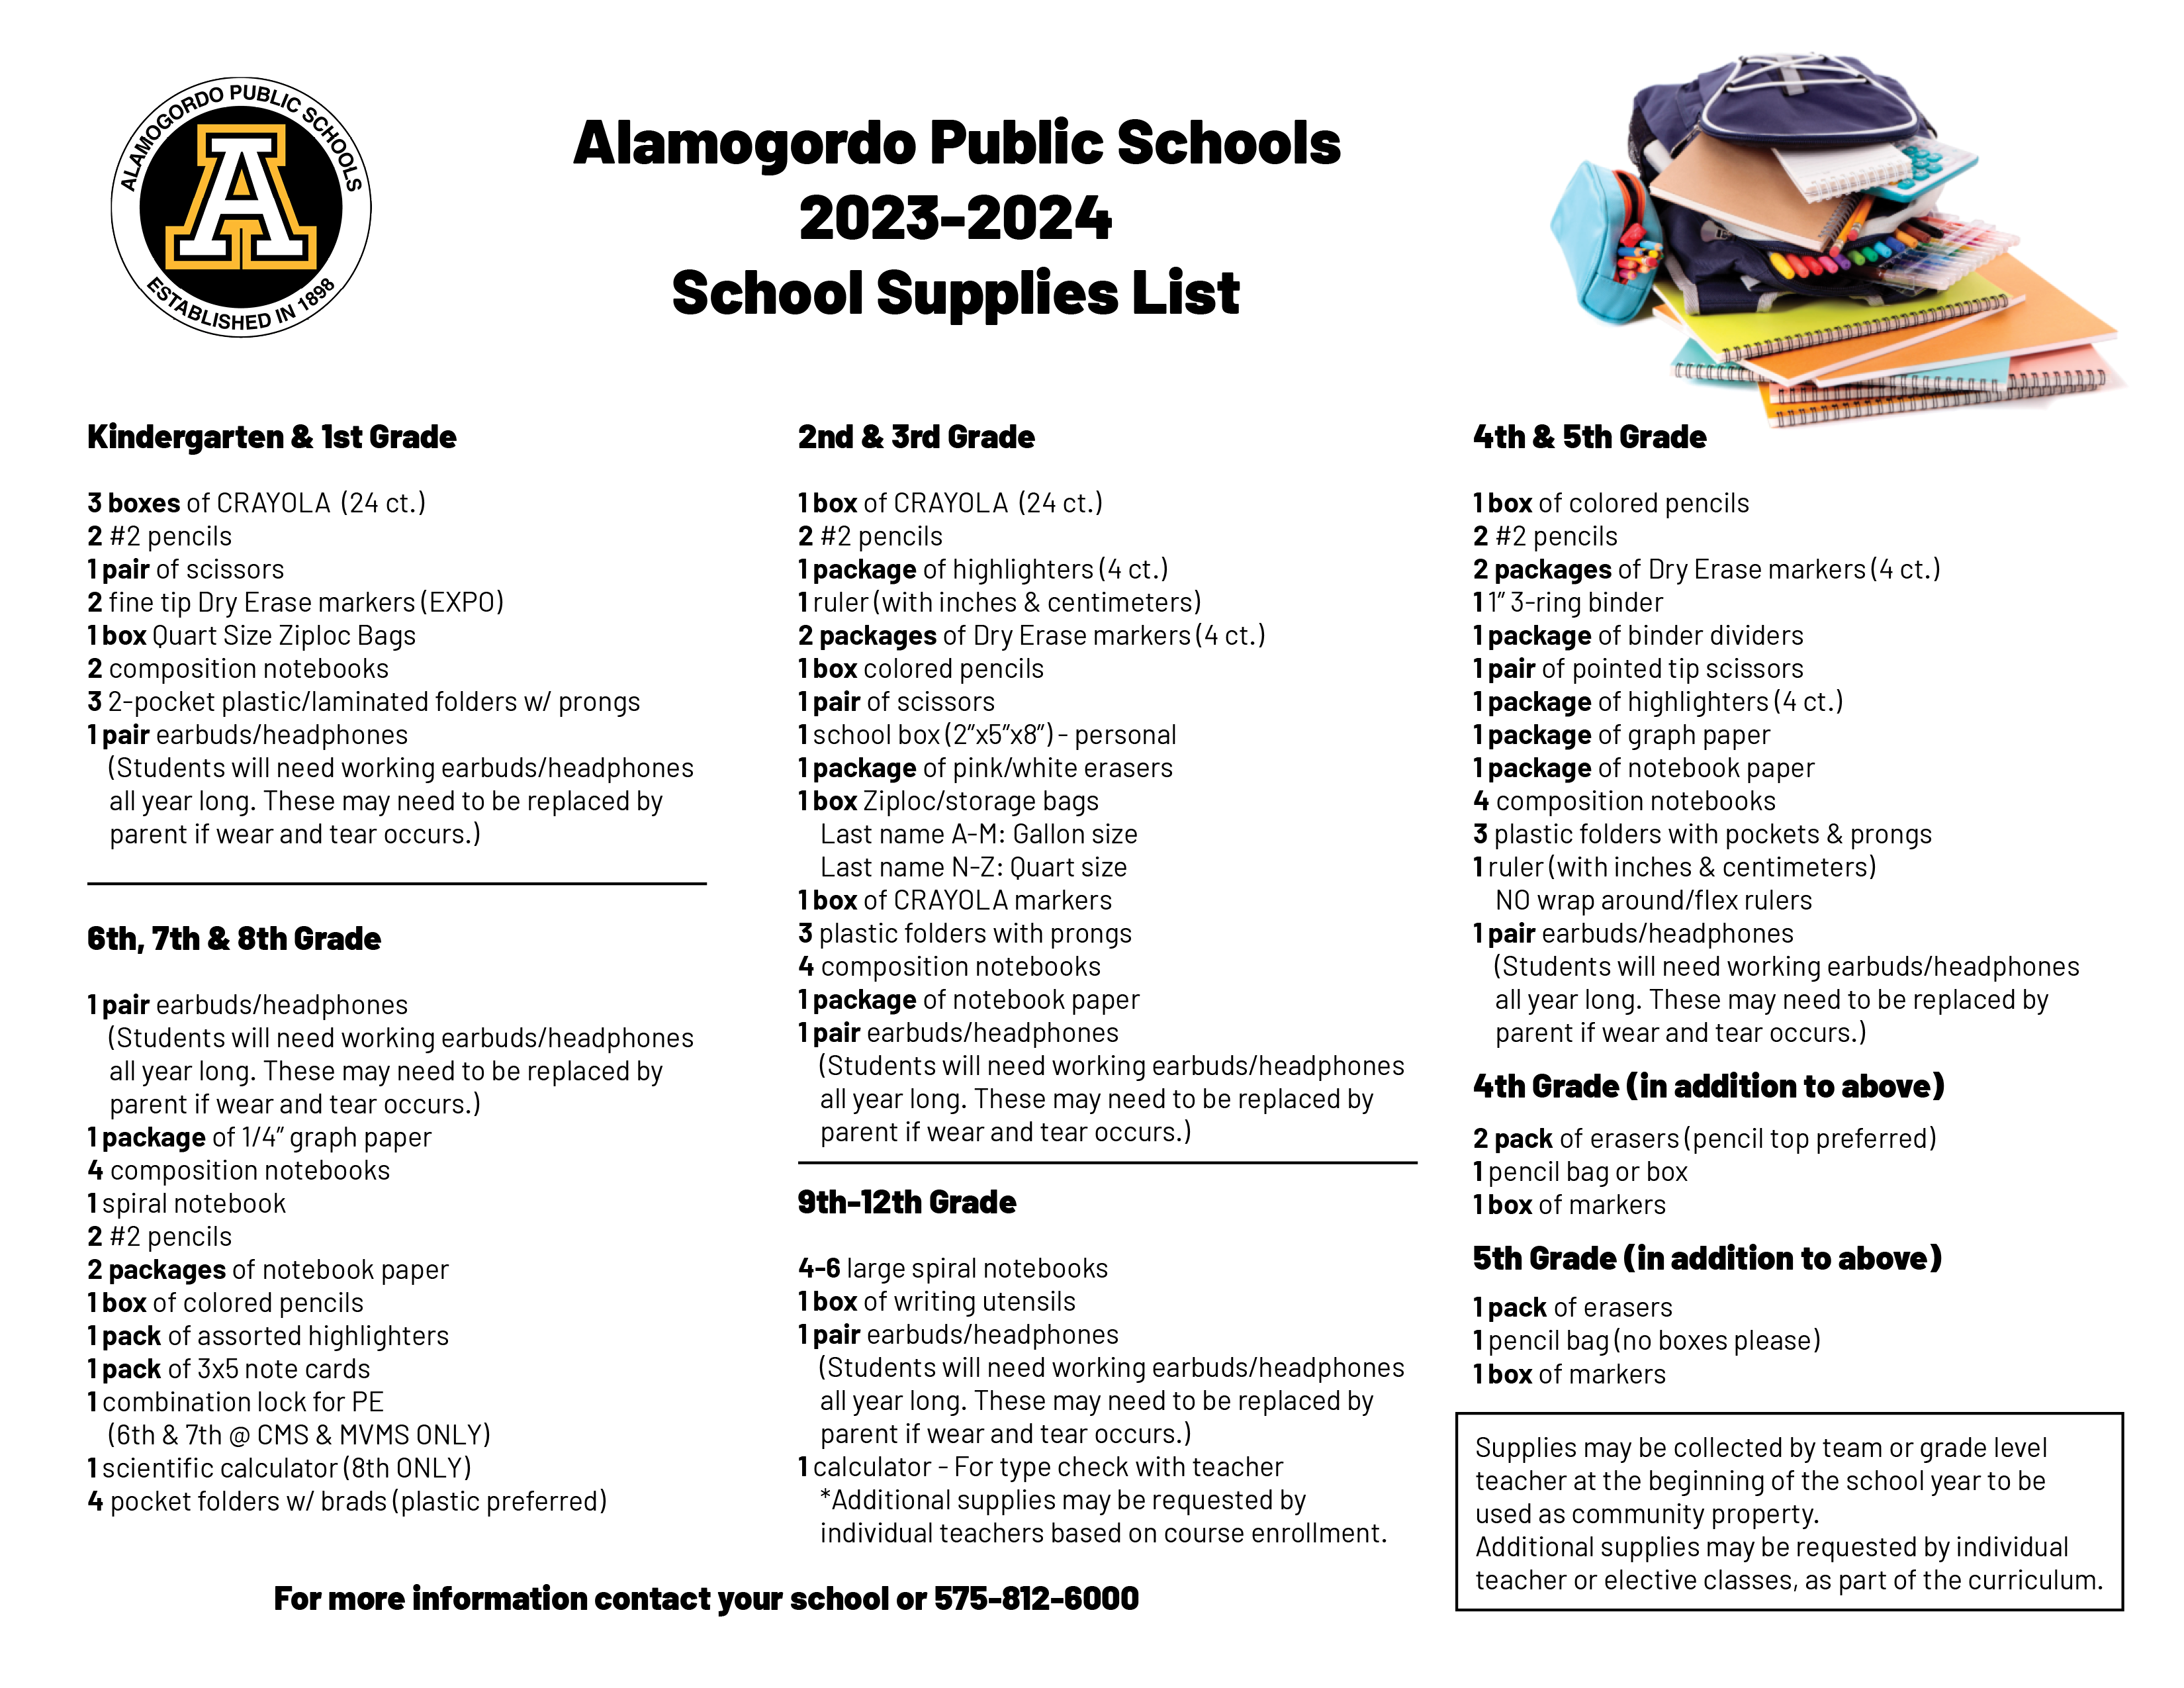 School Supply List for 2023-2024